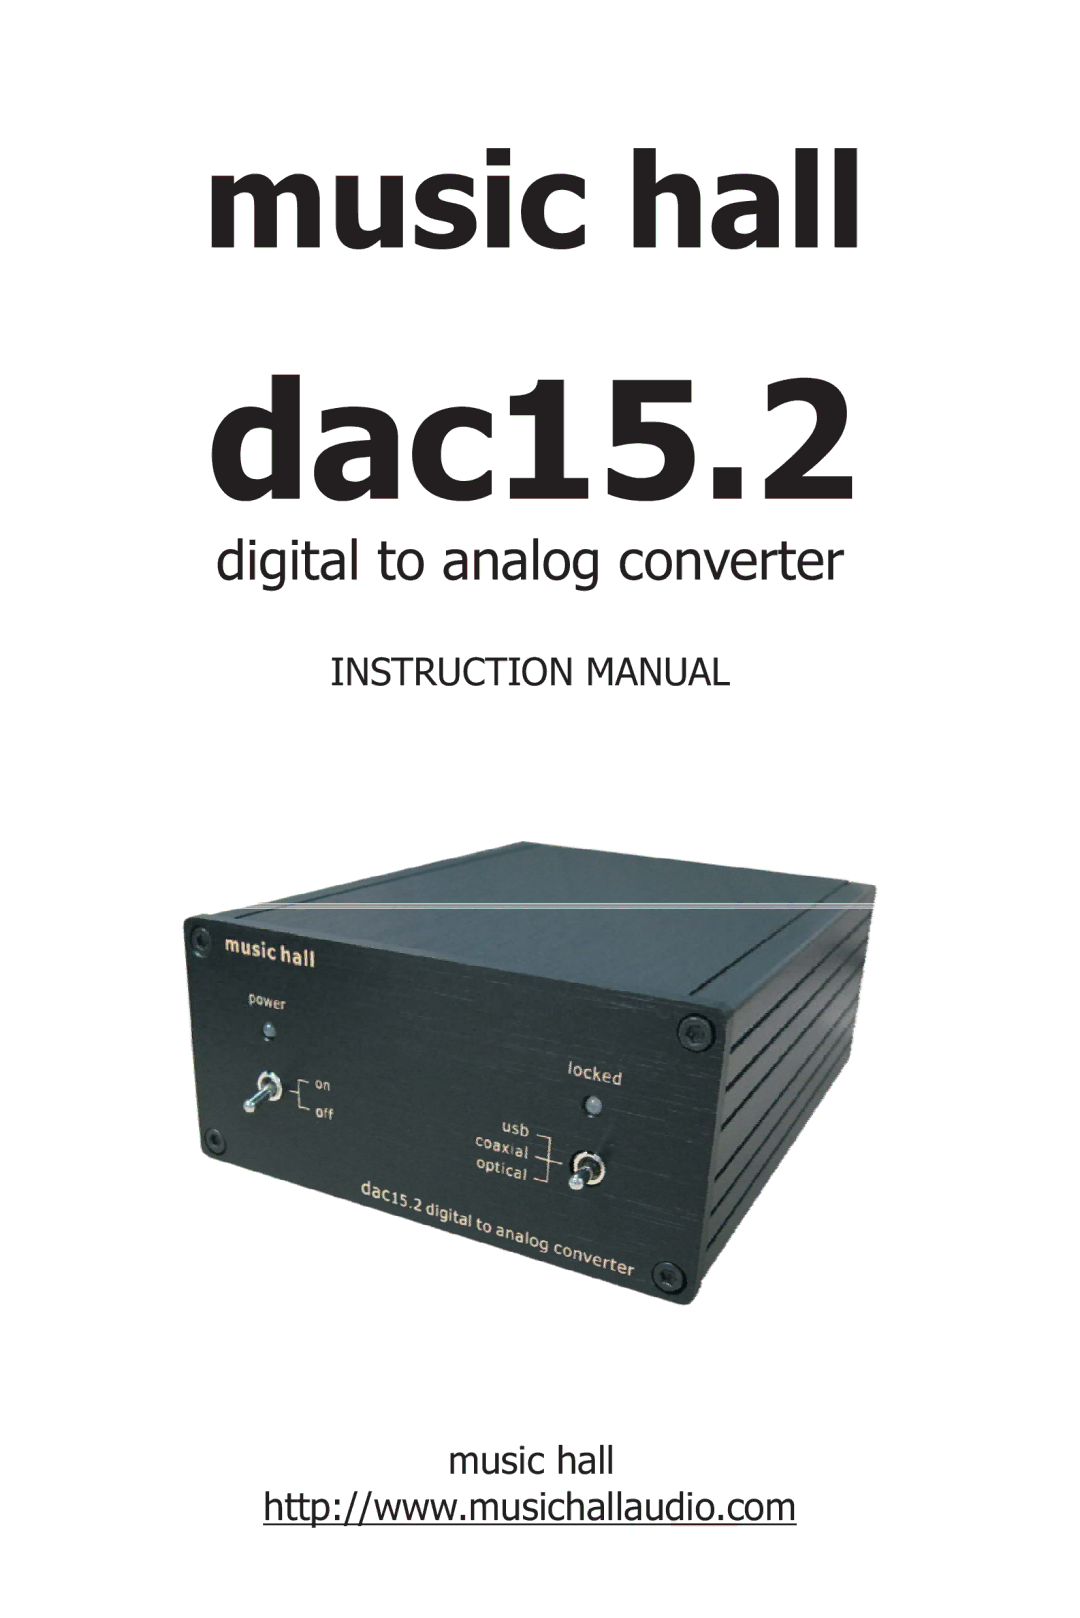 Music Hall dac15.2 instruction manual Dac15.2 